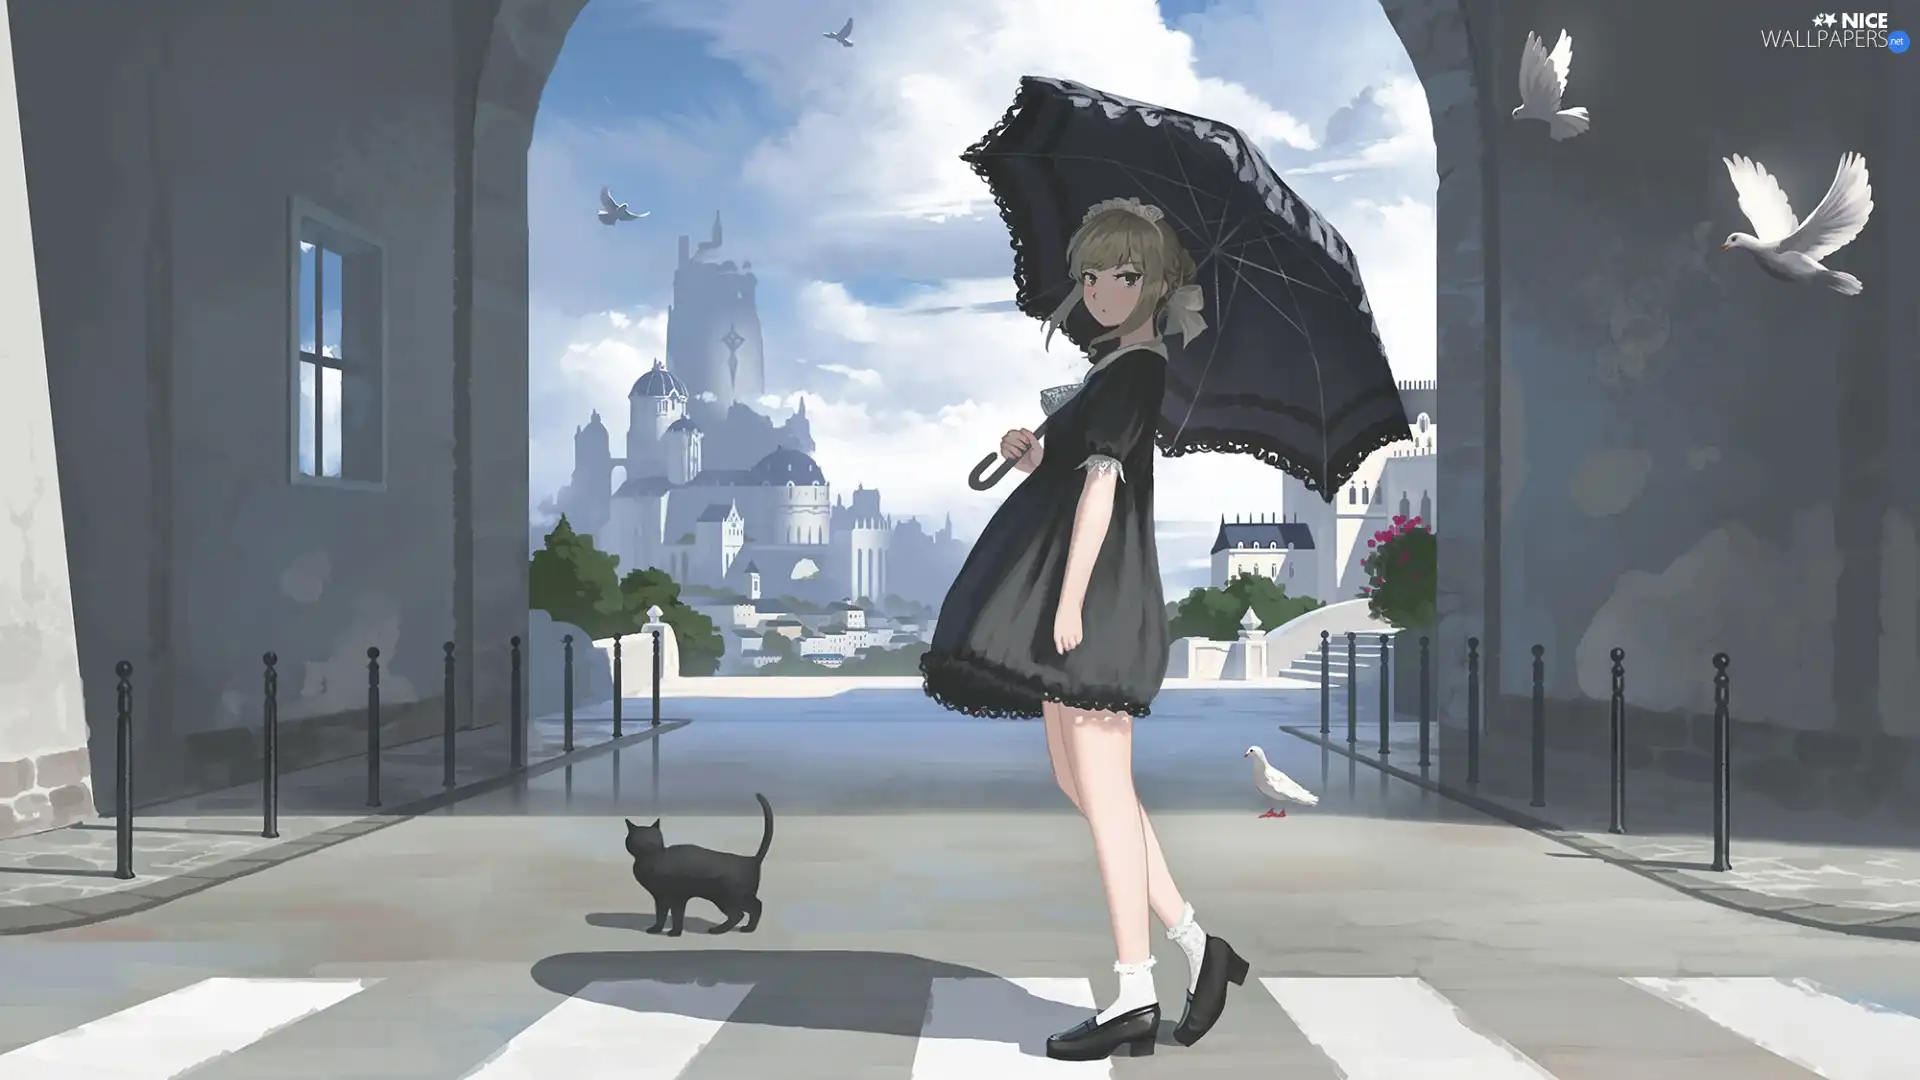 cat, Street, girl, umbrella, Manga Anime